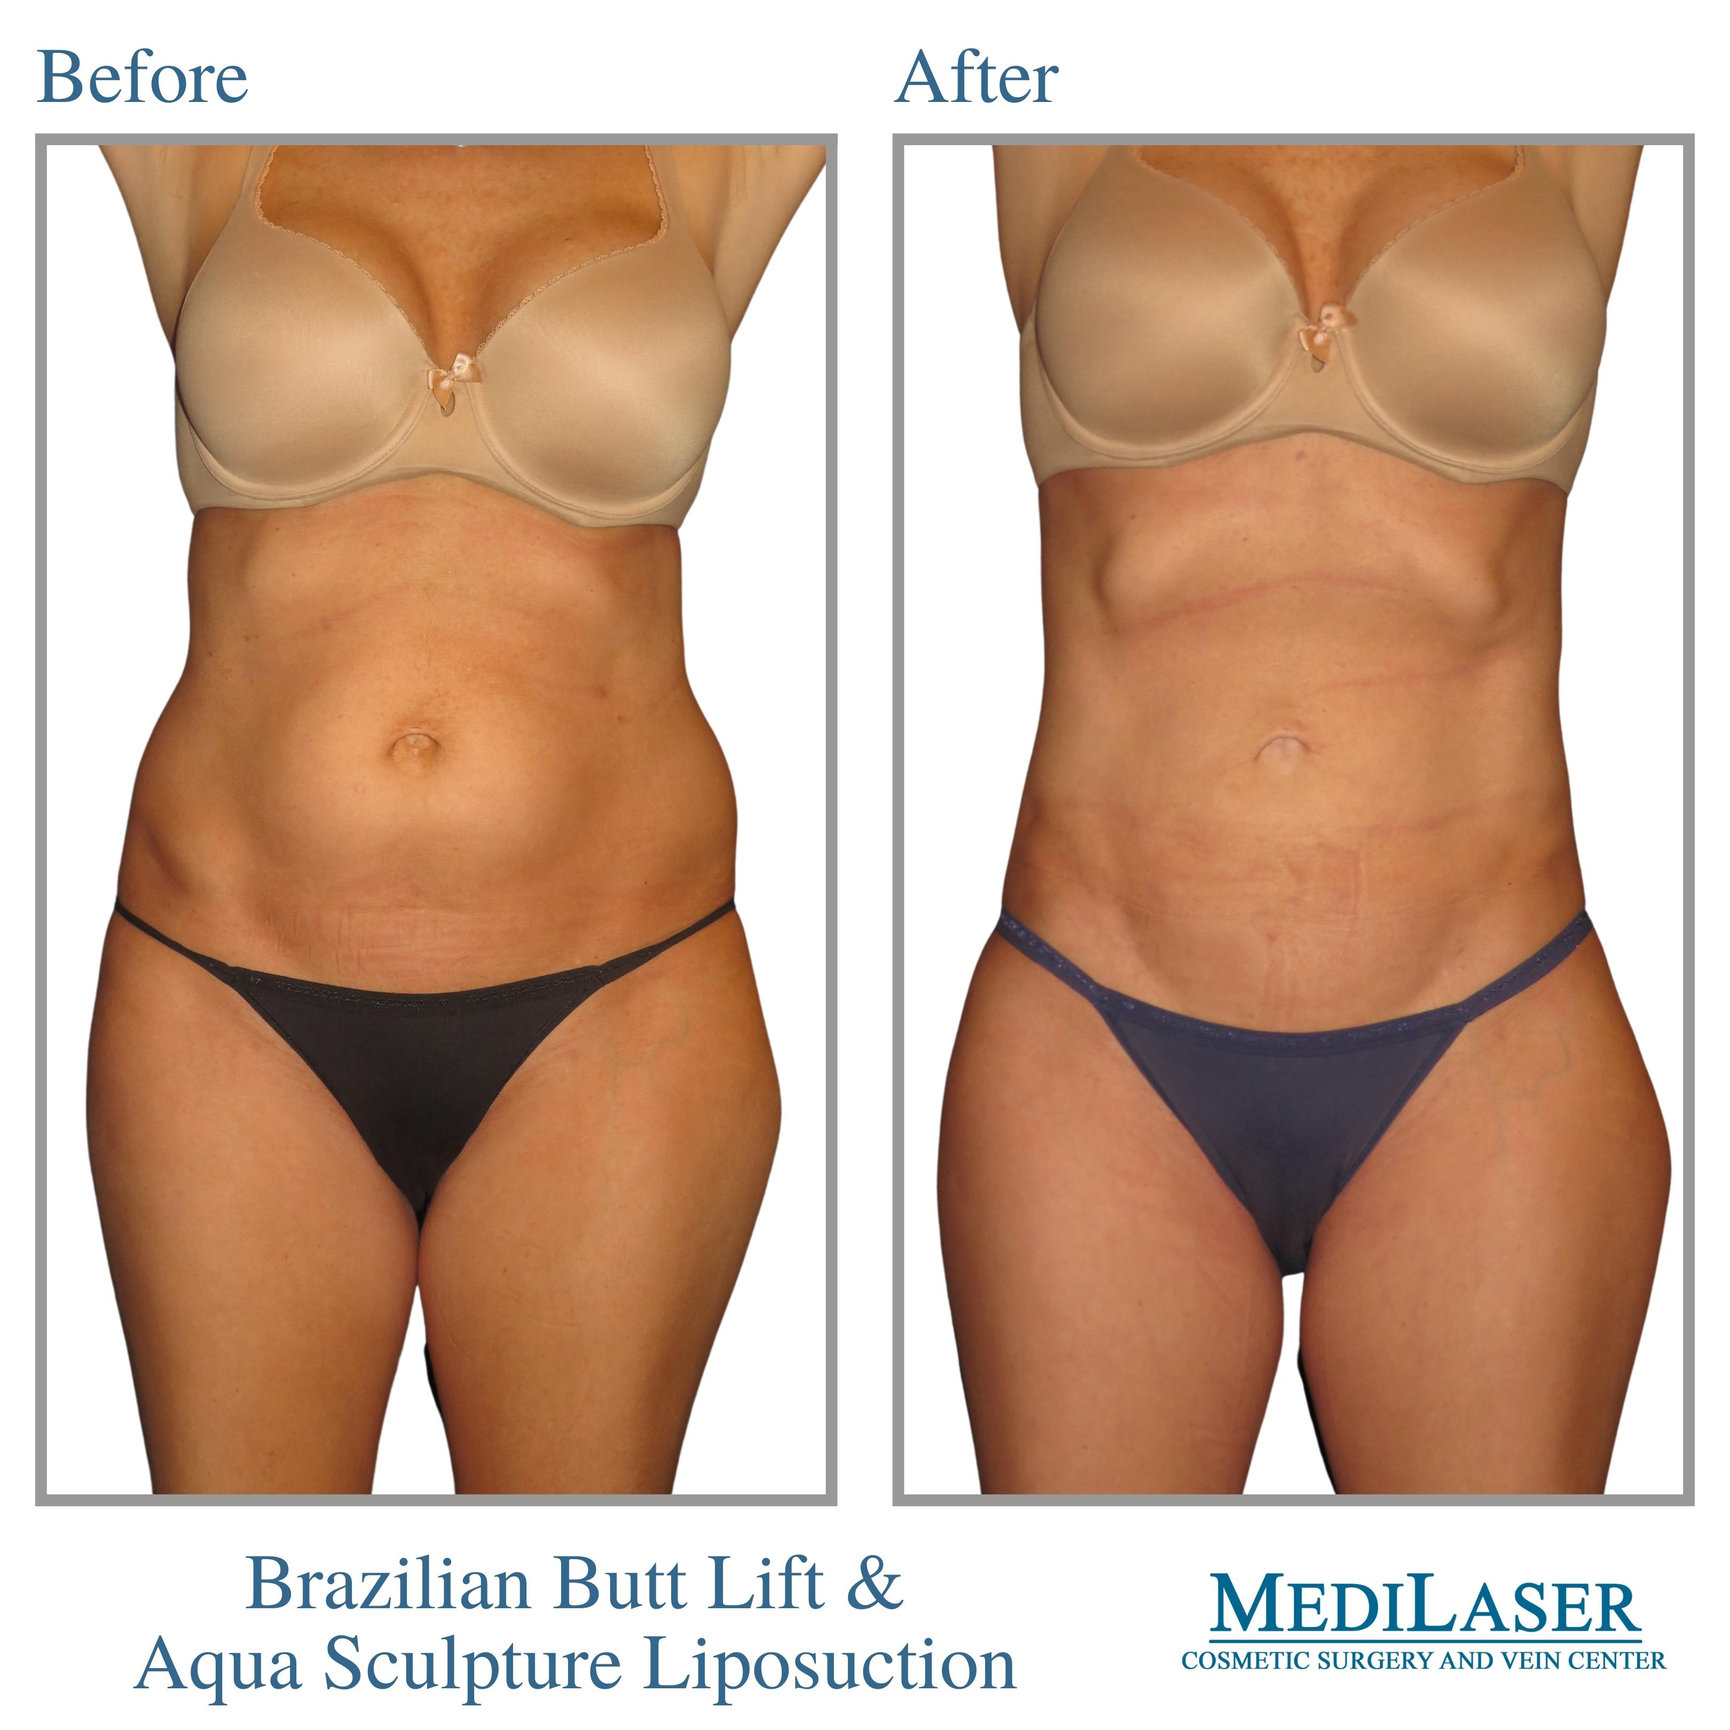 Brazilian Butt Lift Before and After - Medilaser Surgery and Vein Center